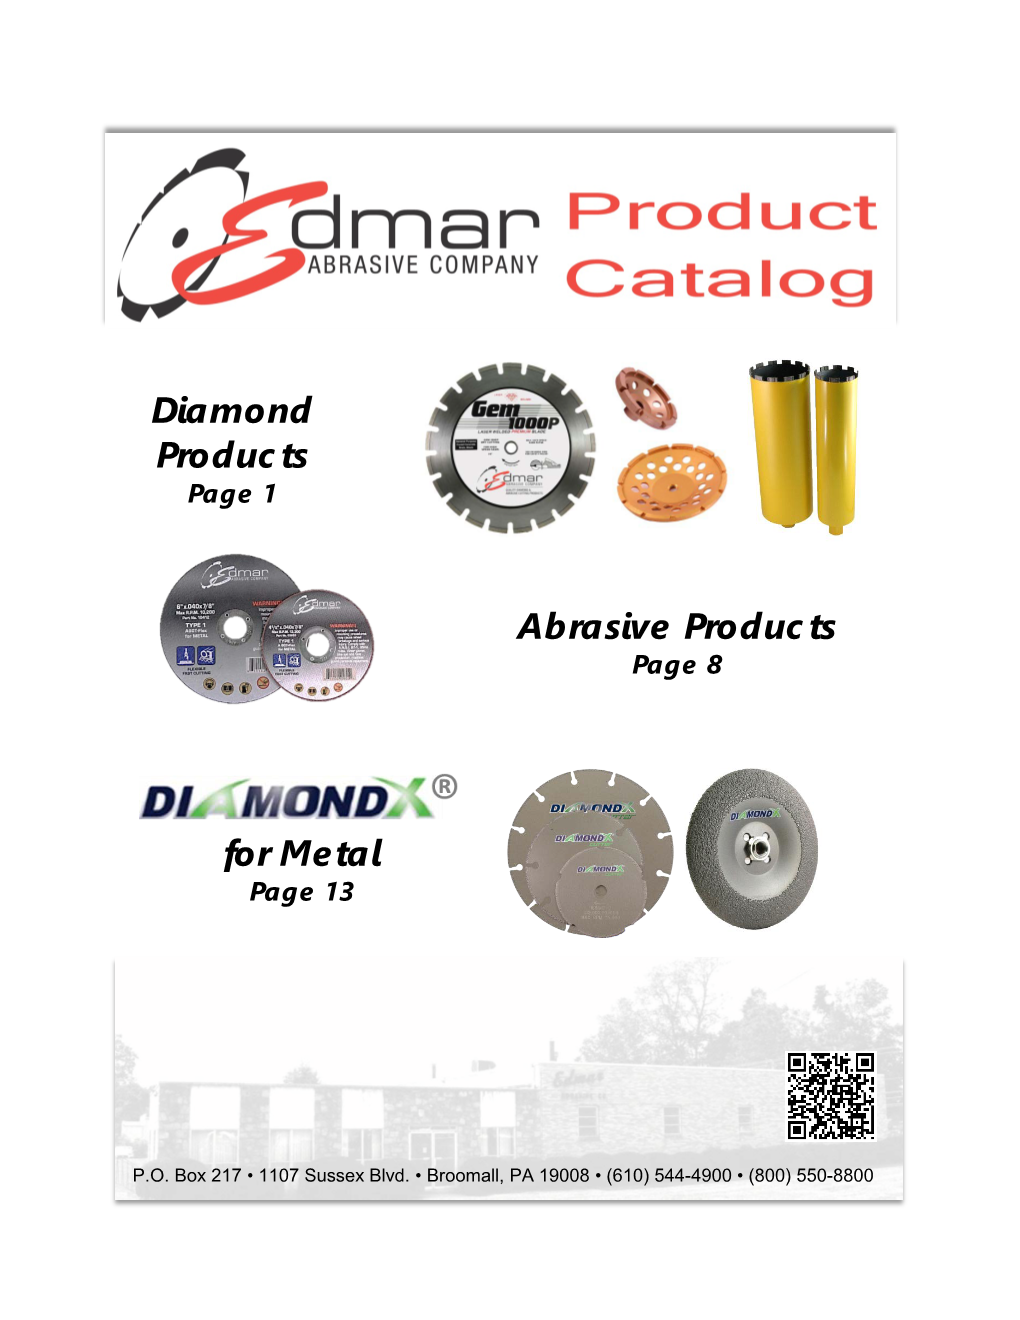 The Edmar Abrasive Company Product Catalog